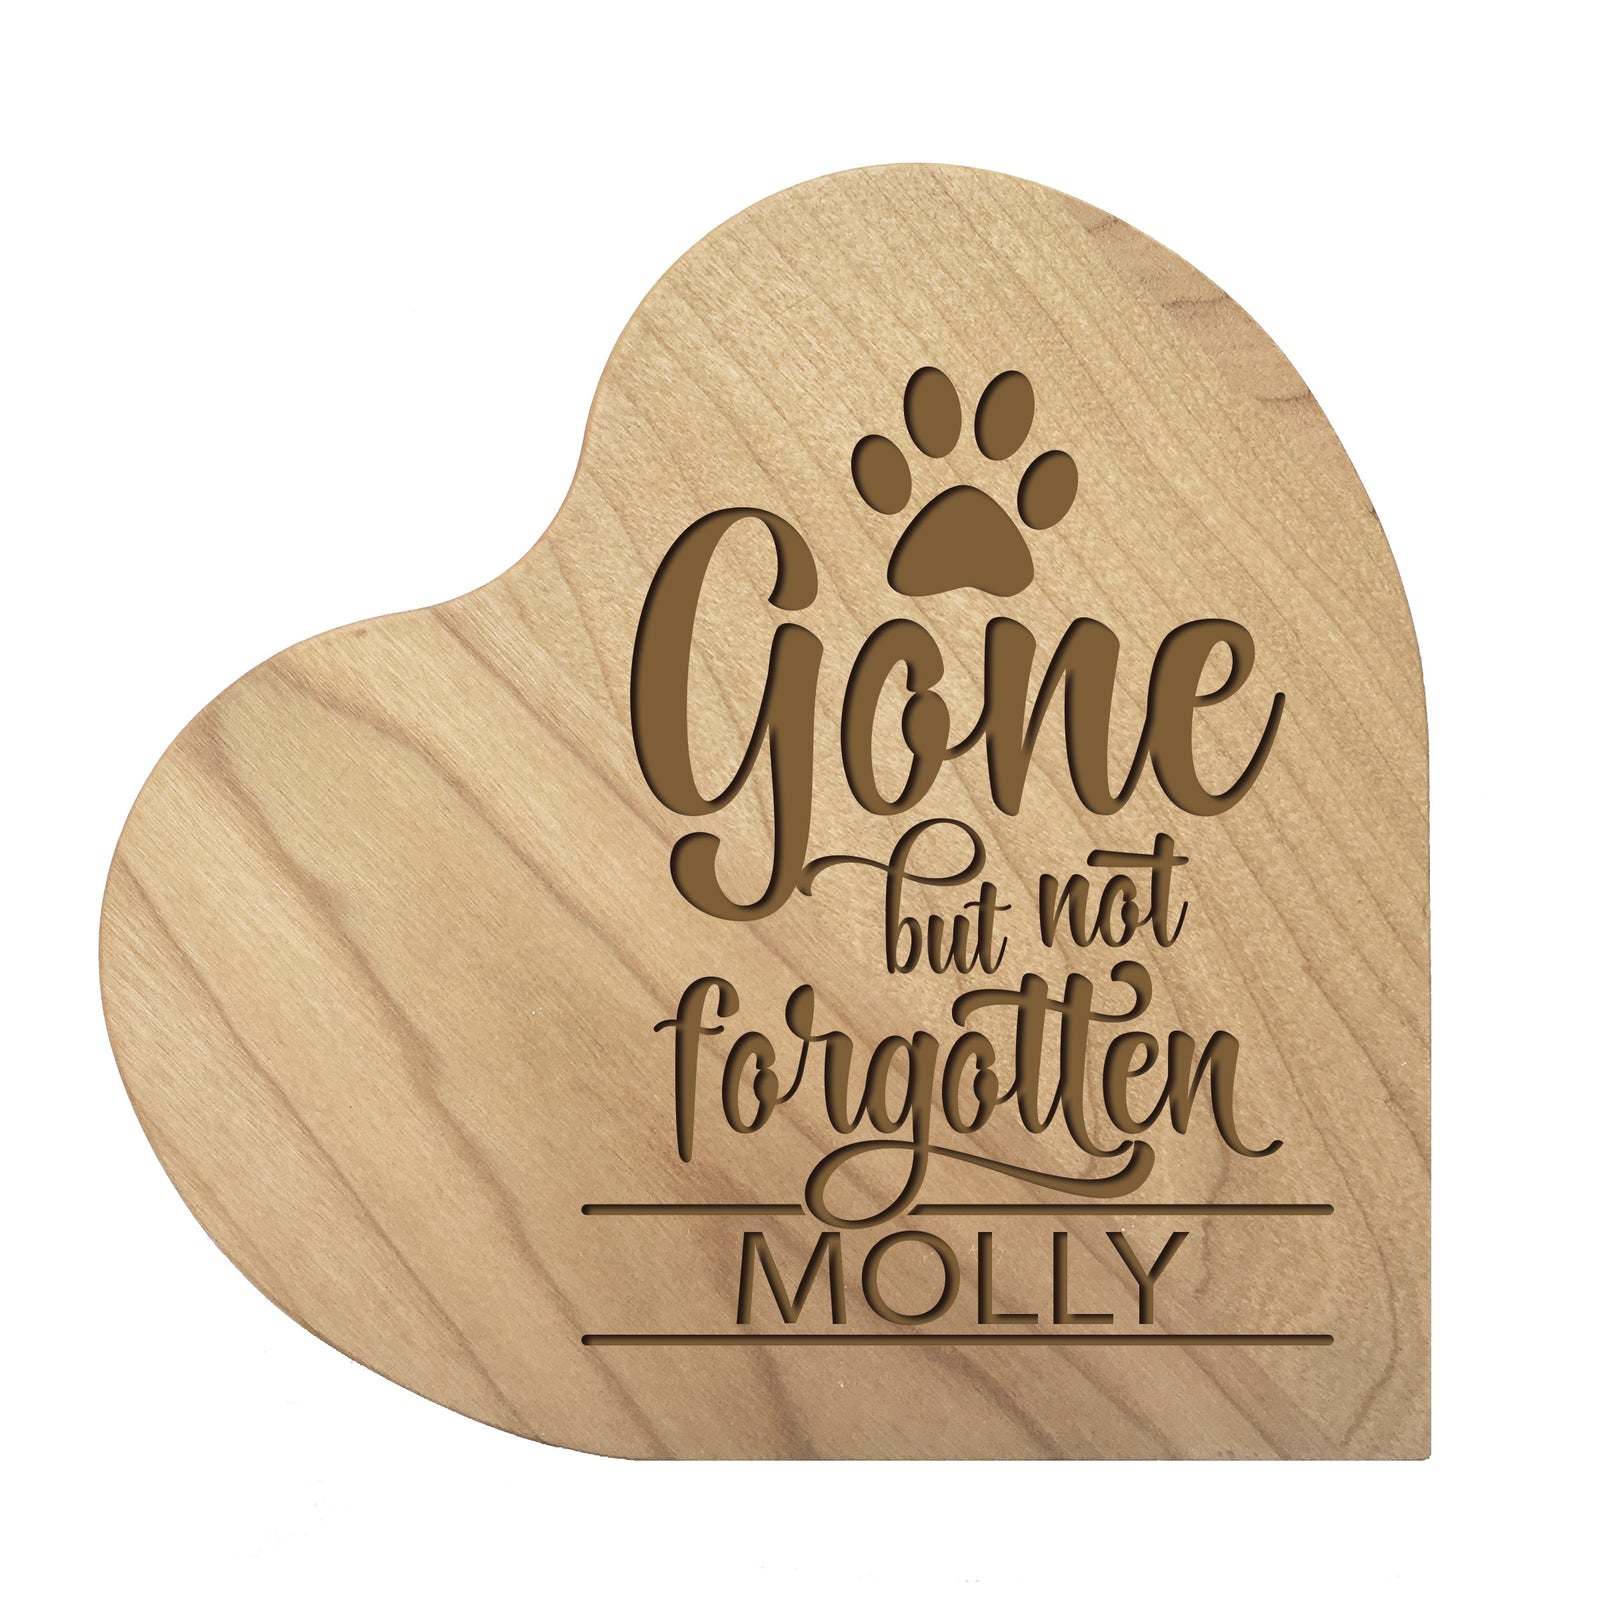 Maple Pet Memorial Heart Block Decor with phrase "Gone But Not Forgotten"